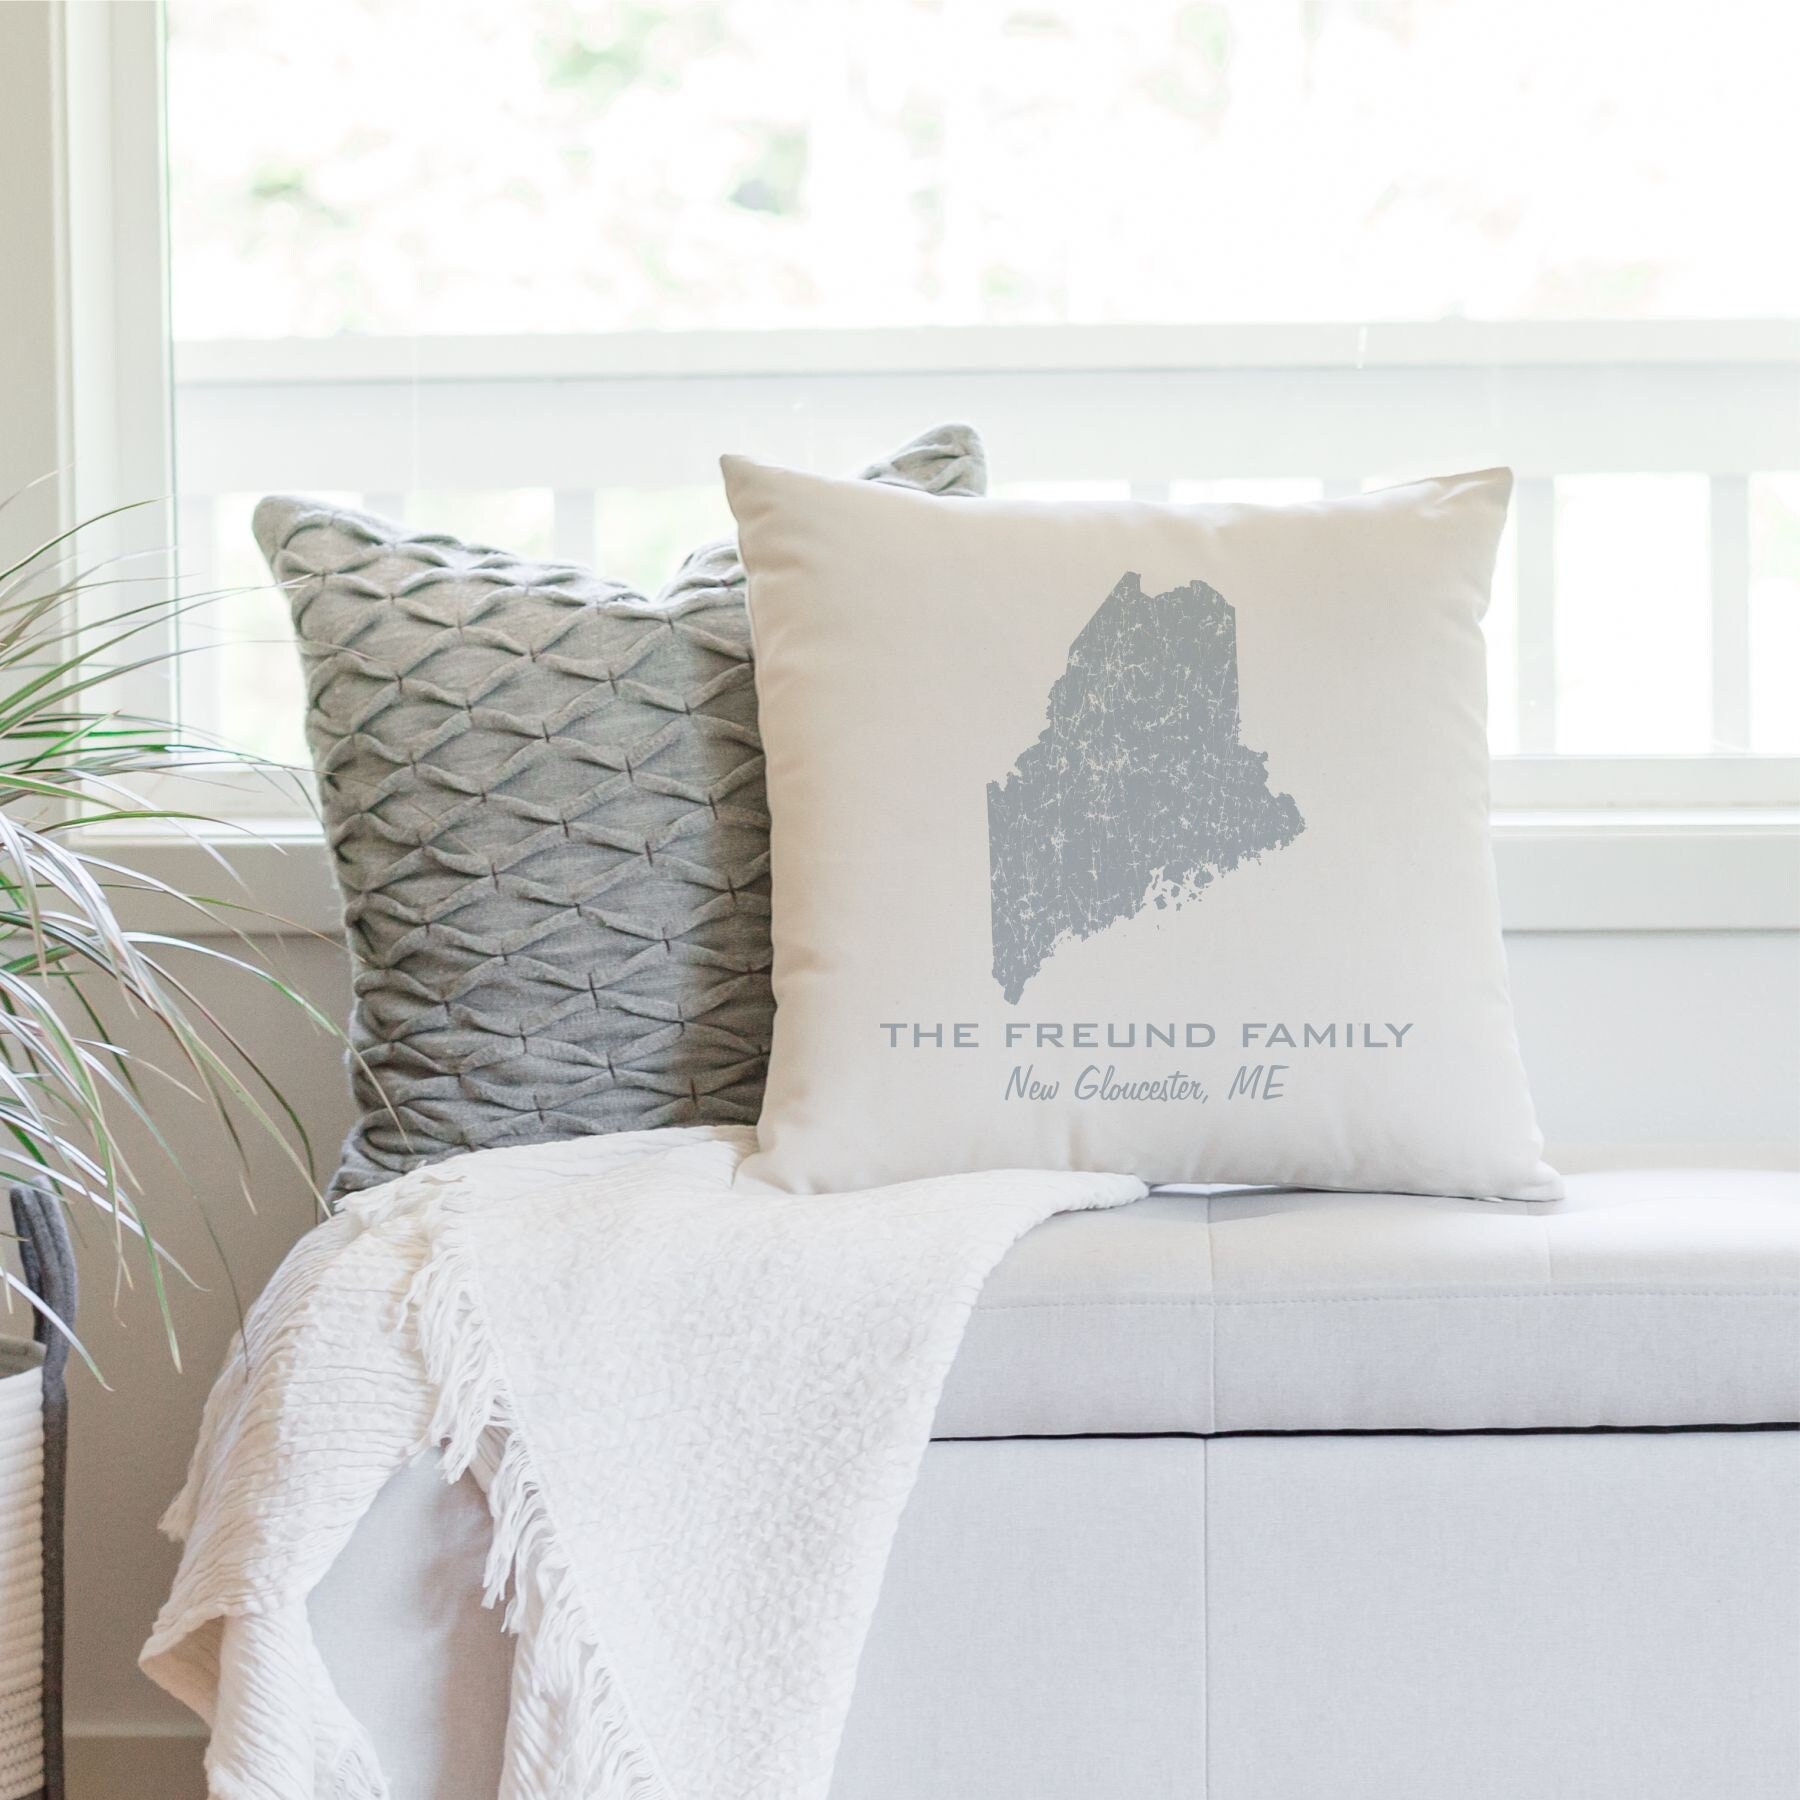 Kidney Pillow – Maine Cottage